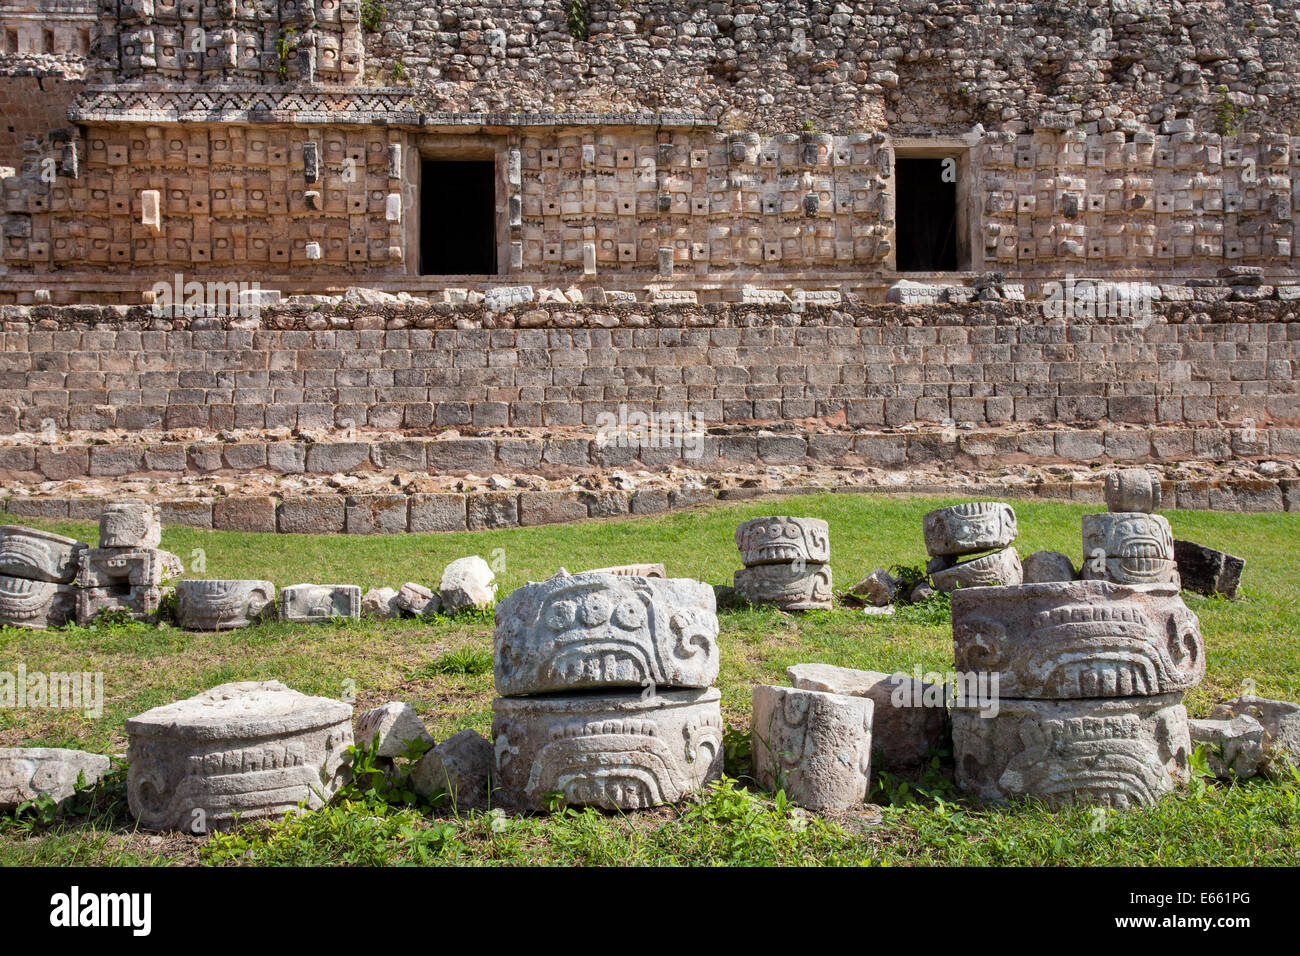 Templo de las máscaras en Kabah, Yucatán, México. Foto de stock